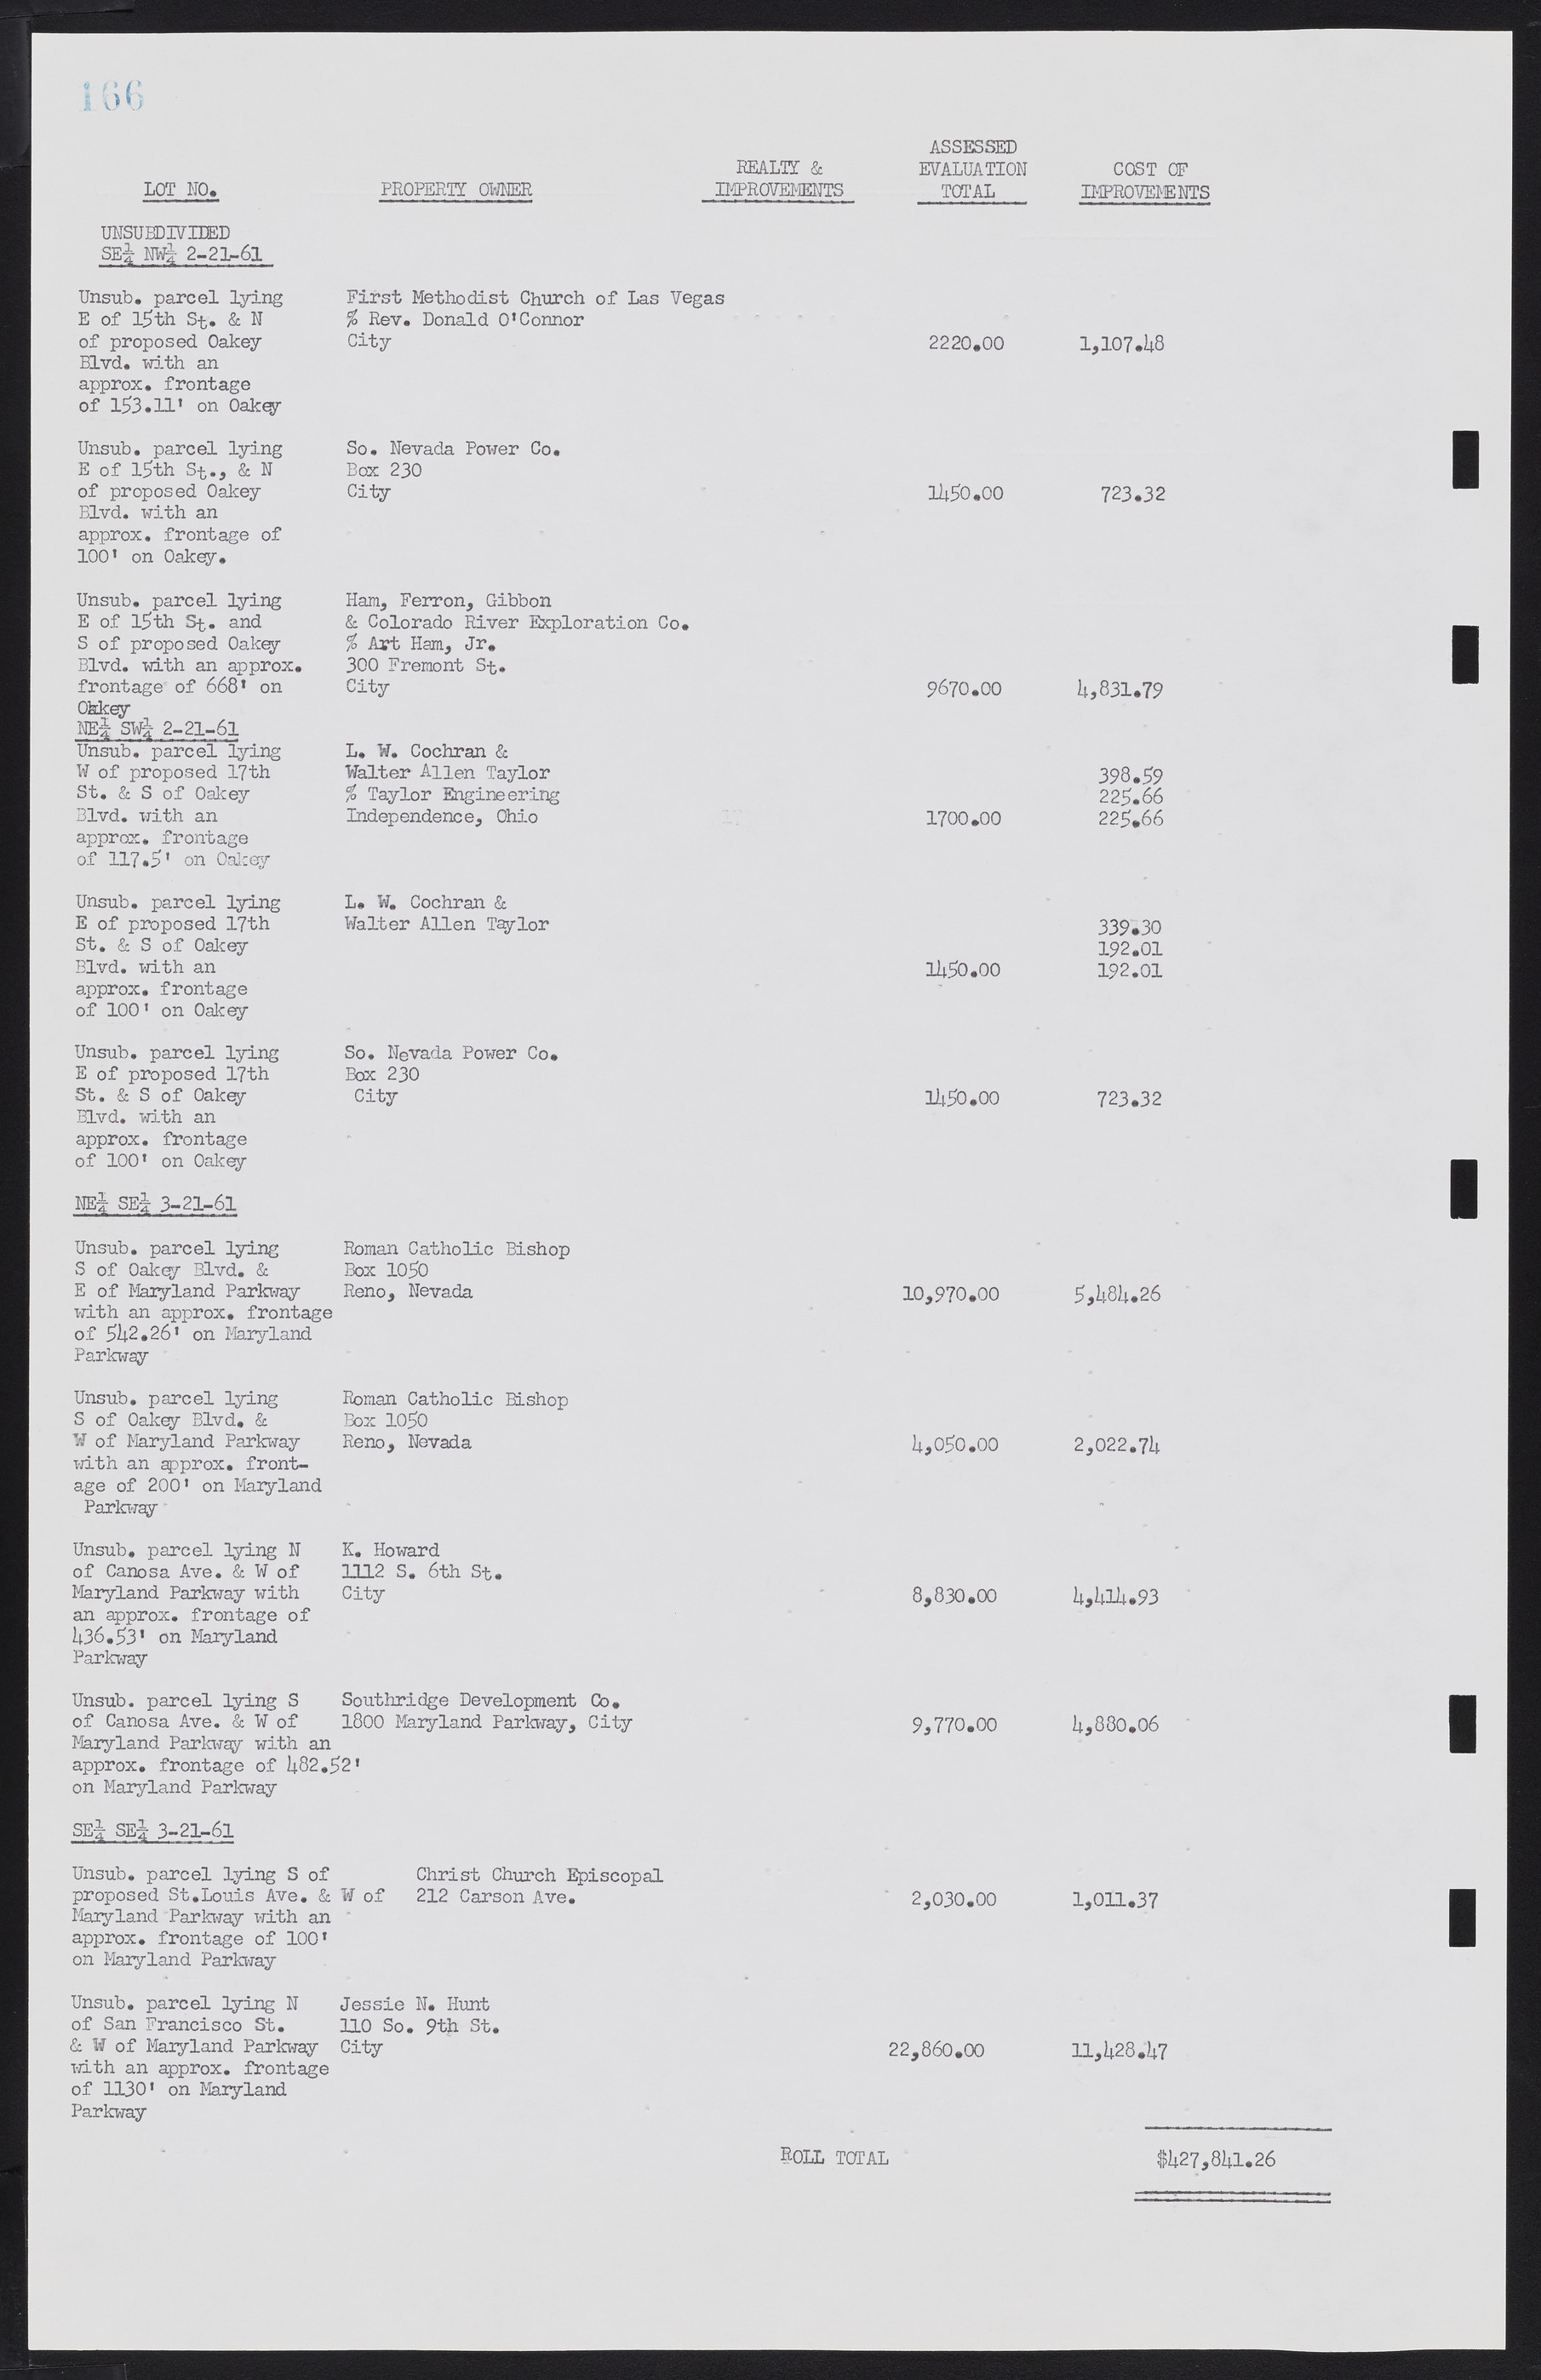 Las Vegas City Commission Minutes, February 17, 1954 to September 21, 1955, lvc000009-172